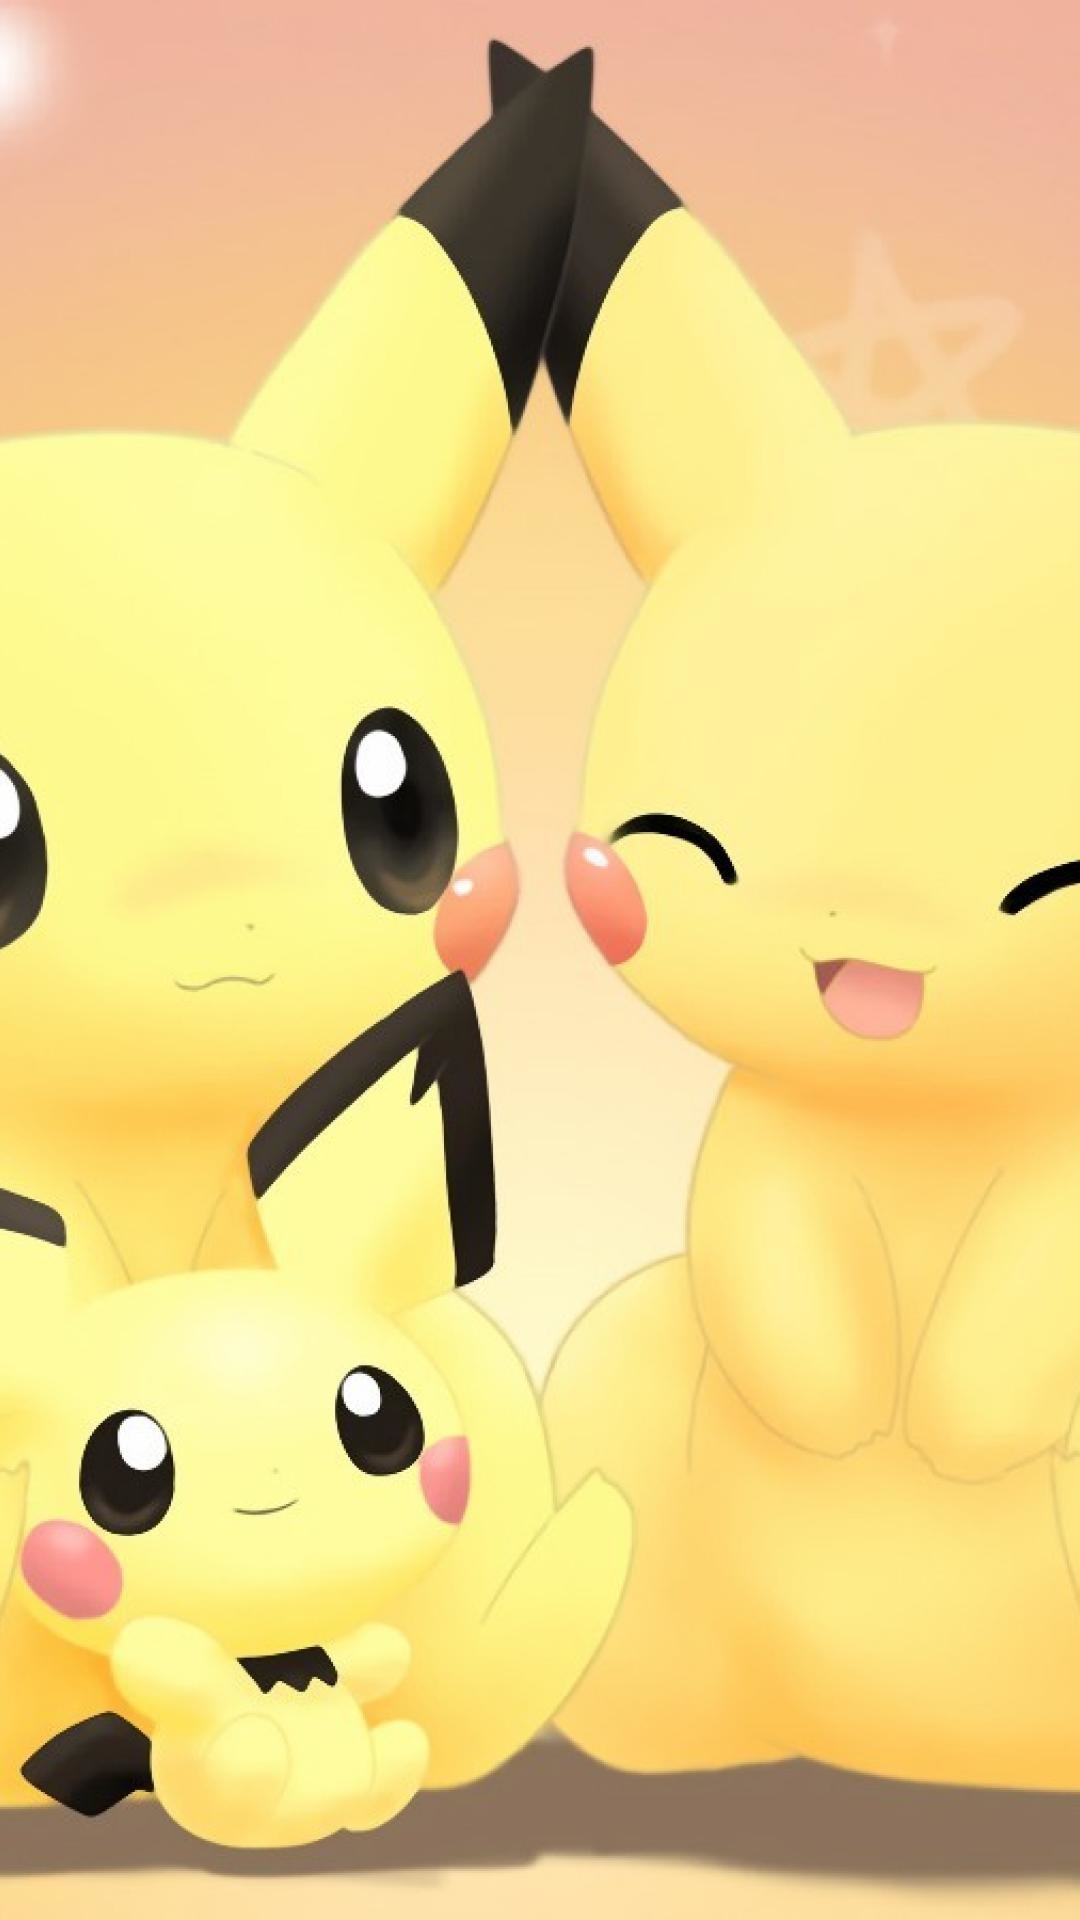 1080x1920 Pokemon cute Pikachu girly love iphone 6 plus  wallpaper.